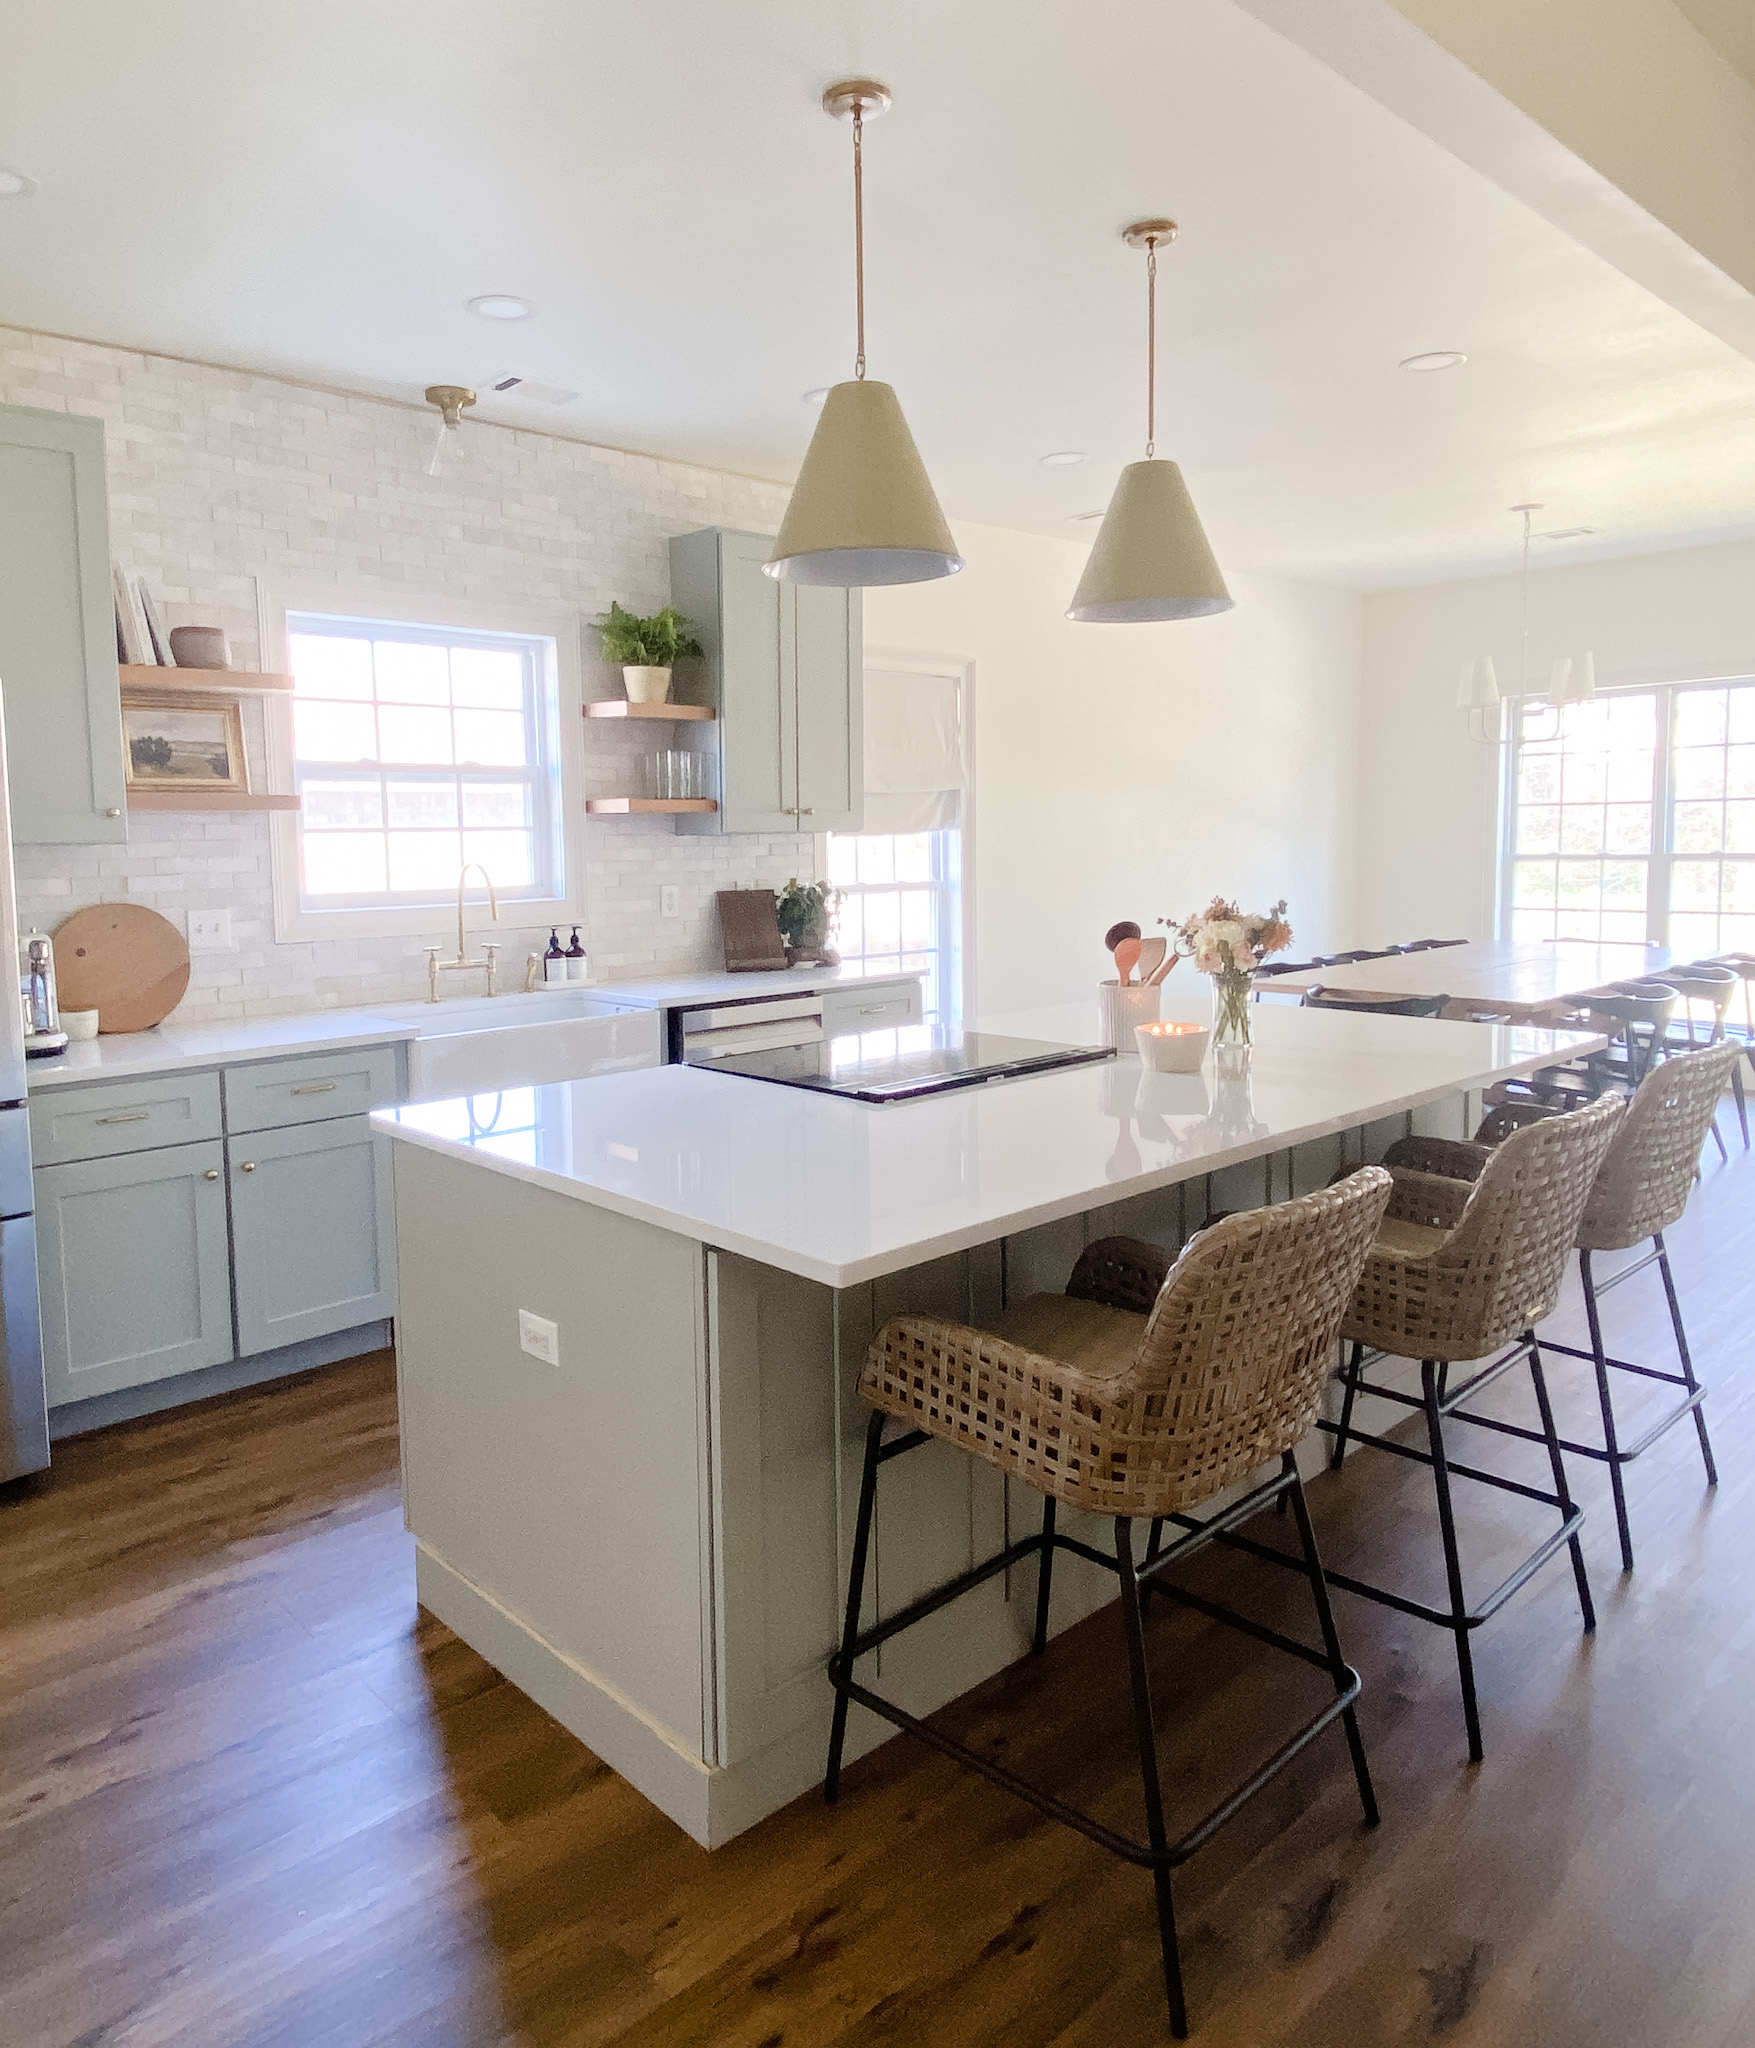 Kitchen renovation with island, wood floors and clay tile backsplash